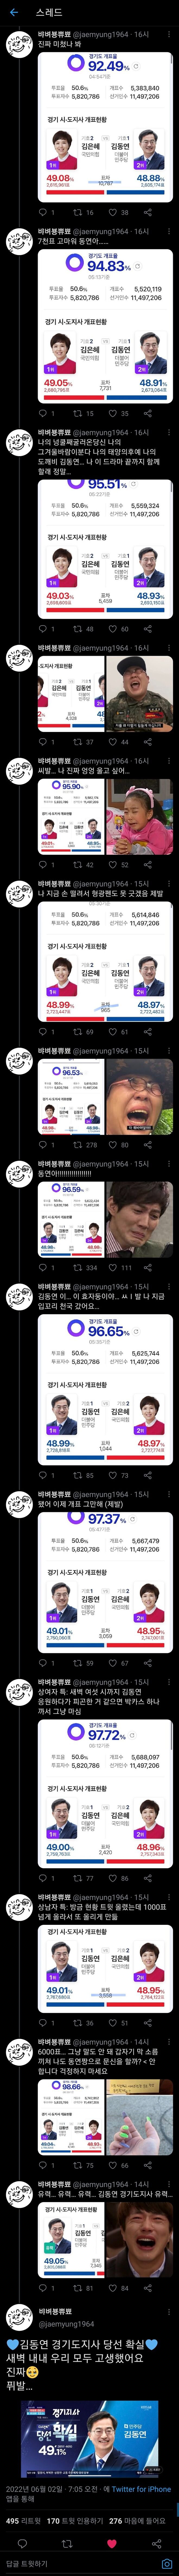 Netizen's Timeline on Kim Dong-yeon's Gyeonggi-do